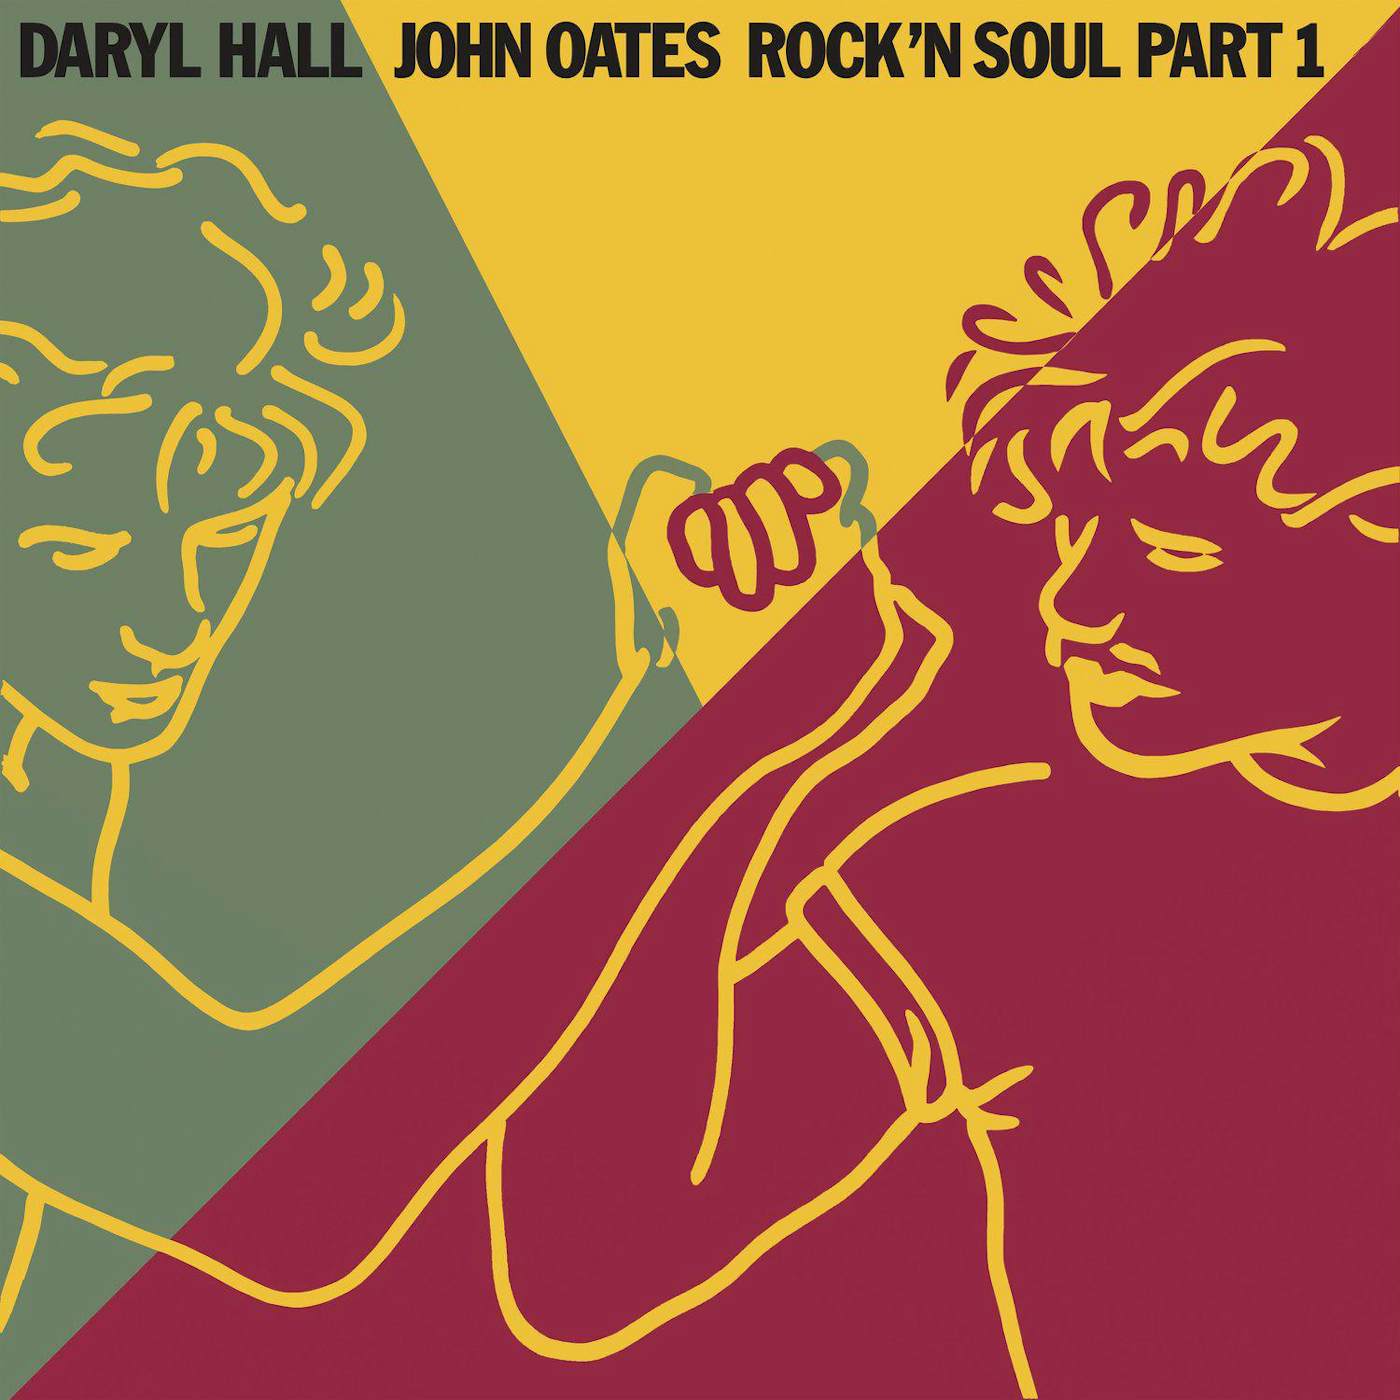 Daryl Hall & John Oates Rock N Soul Part 1 Vinyl Record